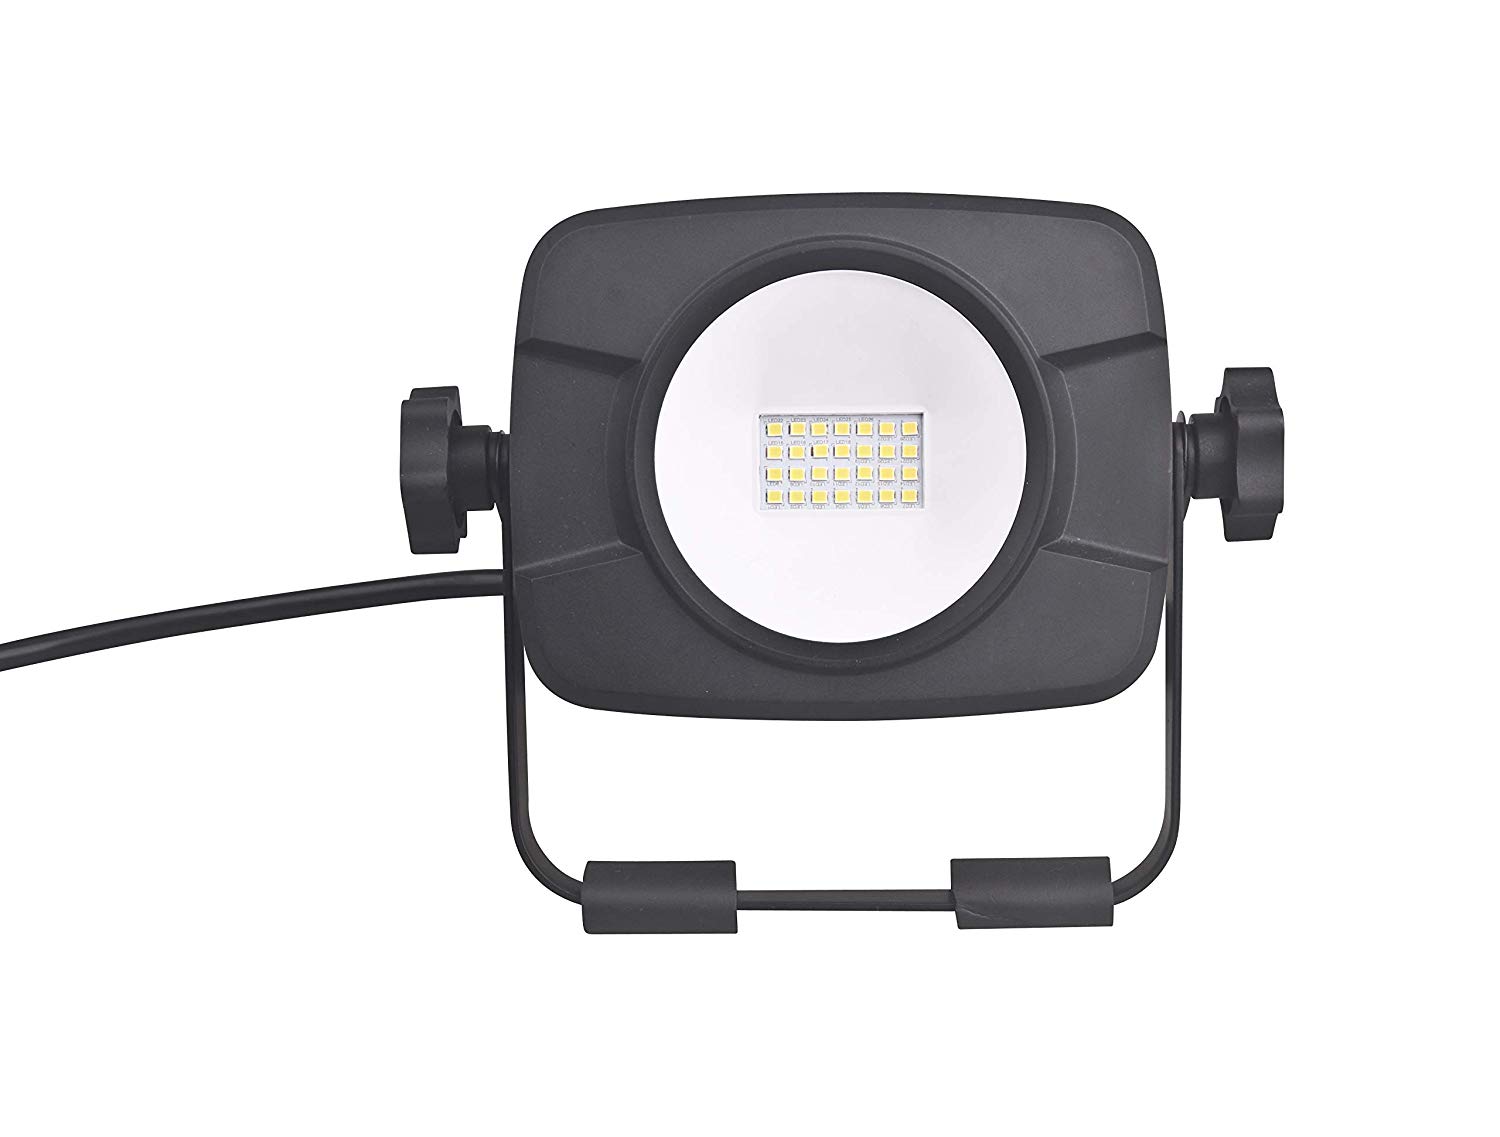 LIT-PaTH LED Work Light, Flood Light with Adjustable Scissors Stand, 13W 1000 Lumen, 5000K Daylight White, ETL Qualifed